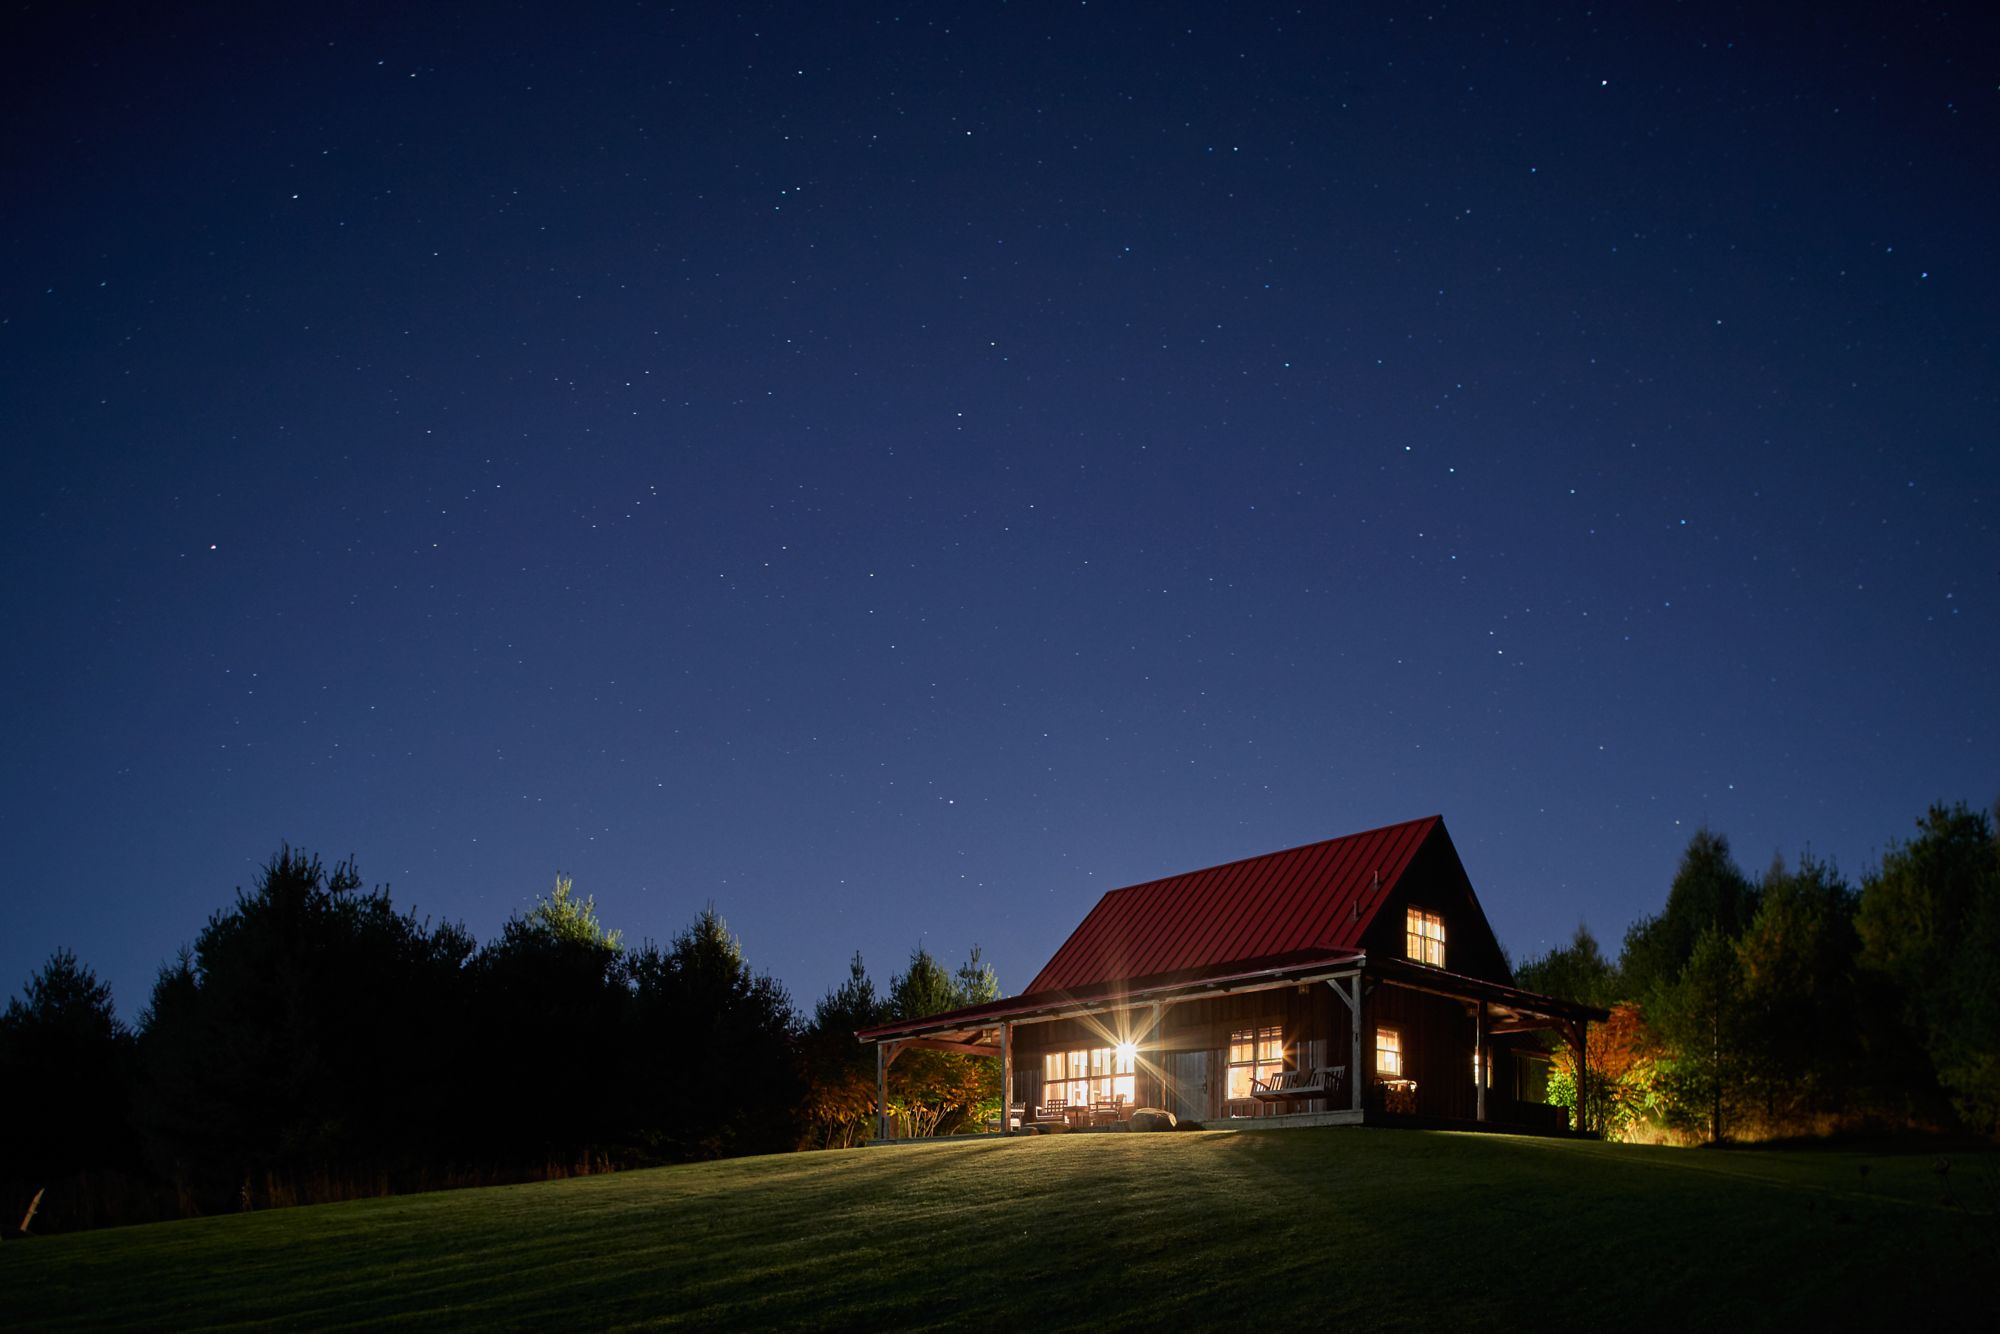 Sandhill Cabin exterior at night, under the stars